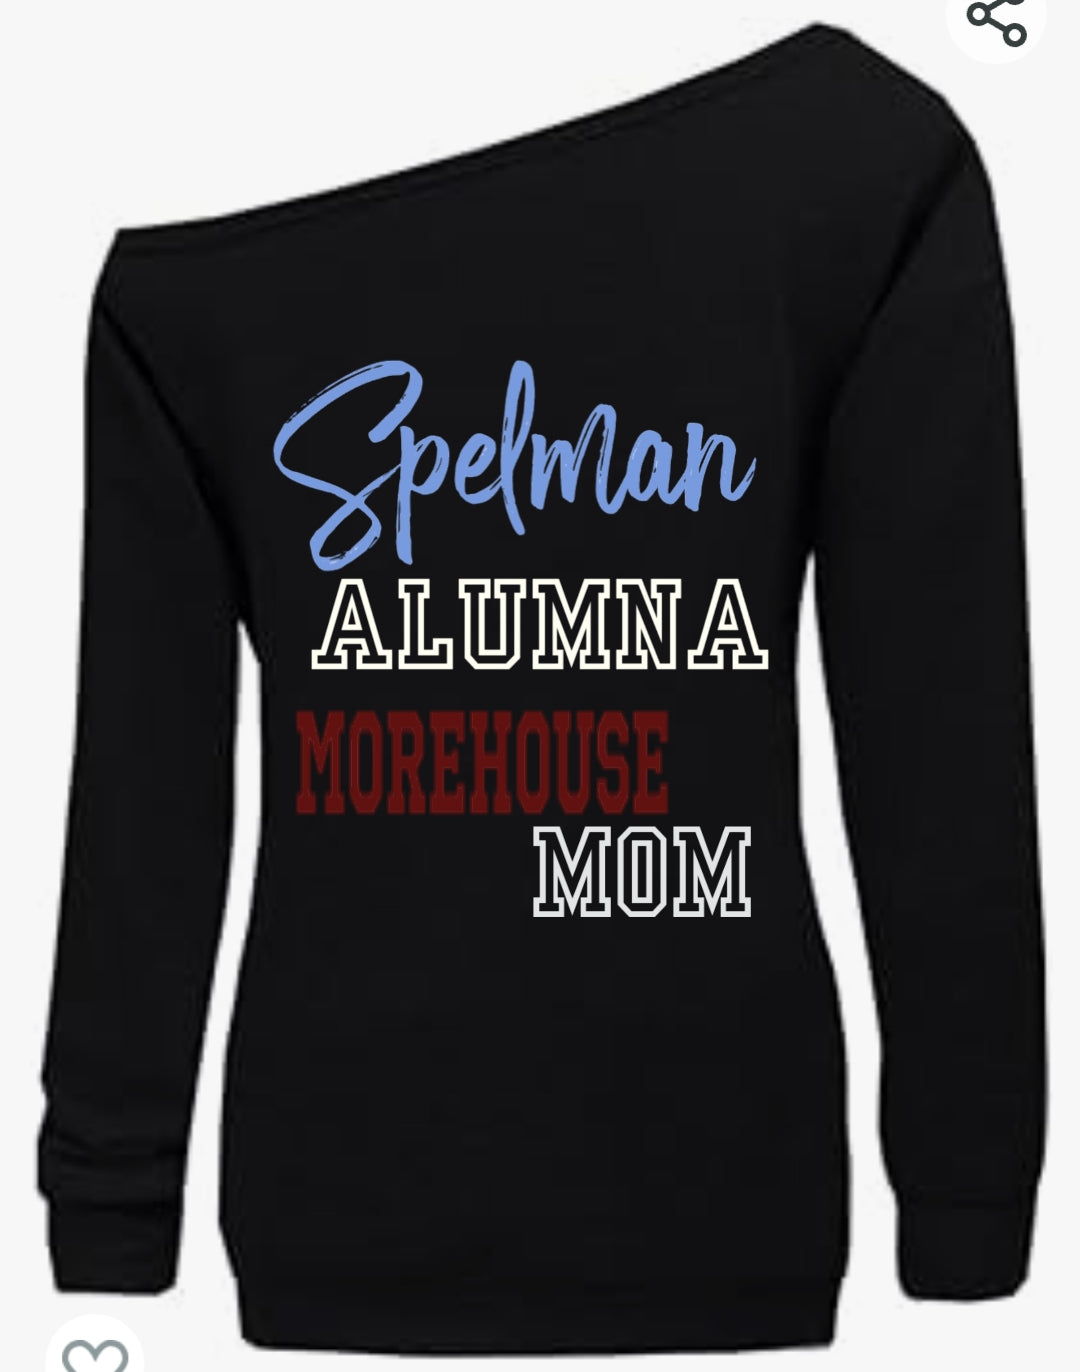 Spelman Alumna Morehouse Mom off the shoulder sweatshirt